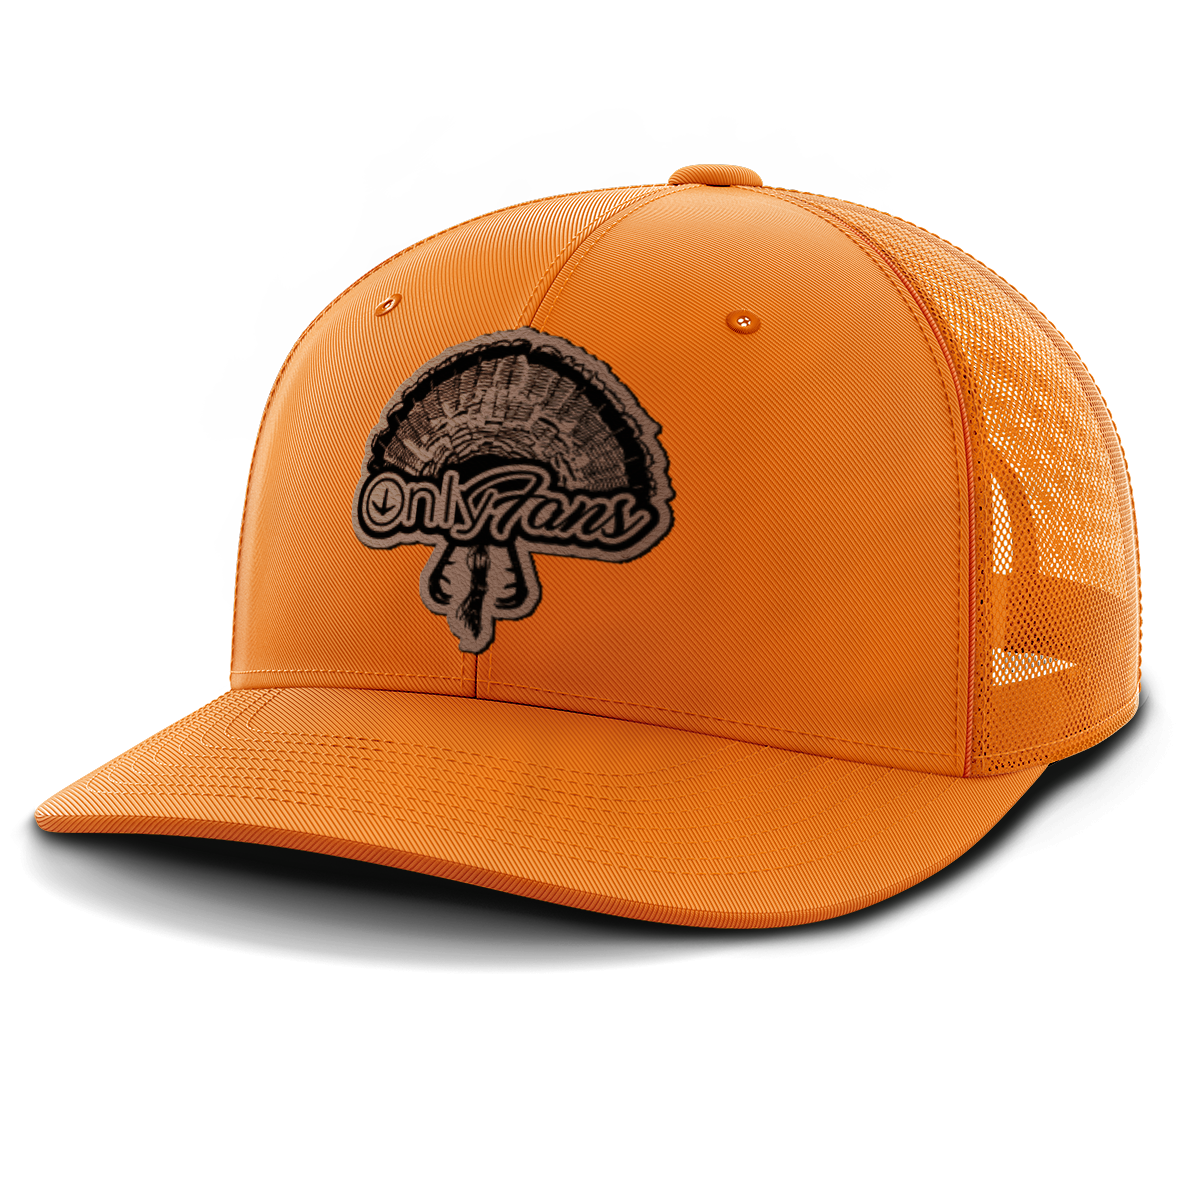 Leather Patch Trucker Hat, Turkey Hunting, Only Fans – Cedar Pine Bay